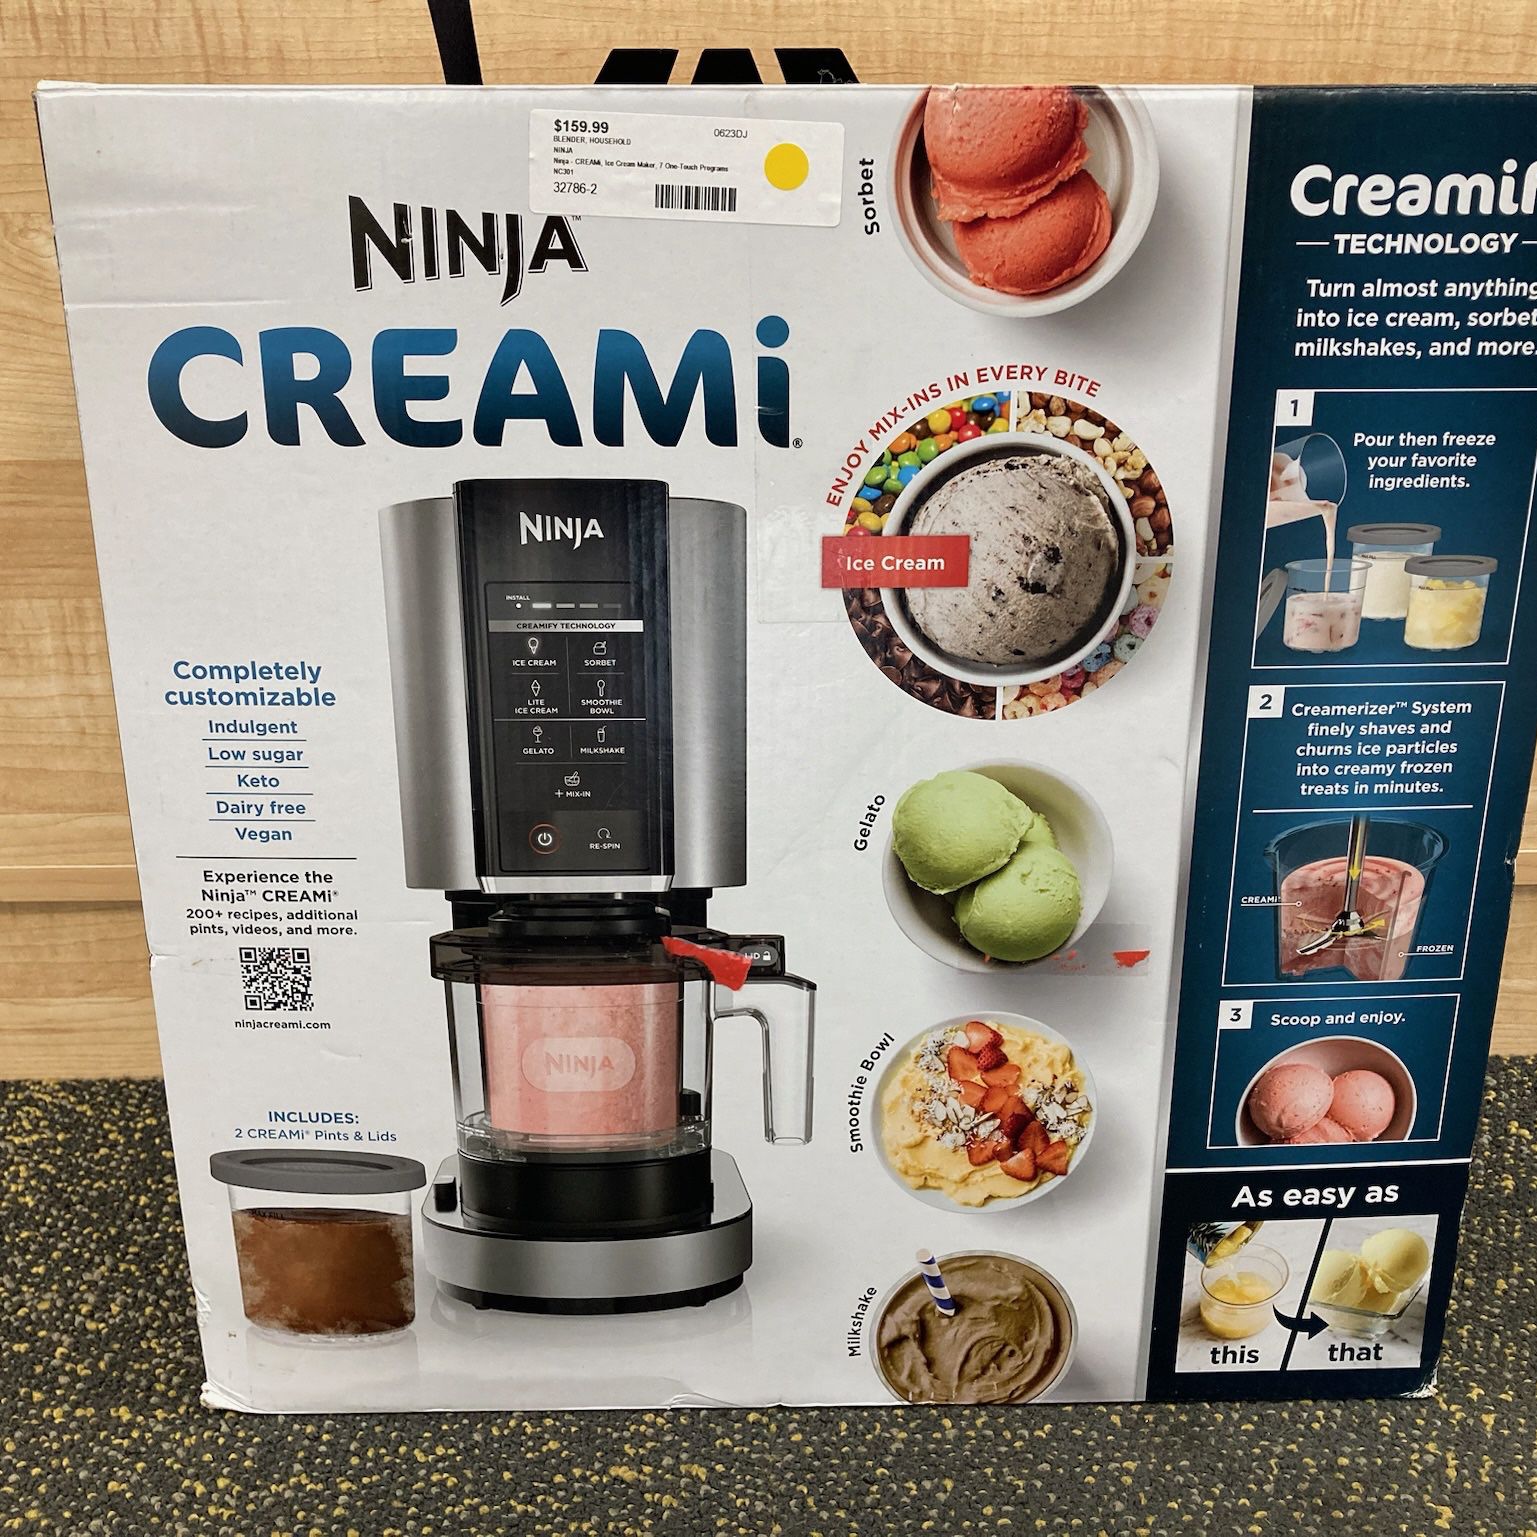 Ninja CREAMi Ice Cream Maker 7 One-Touch Programs 16oz Pint